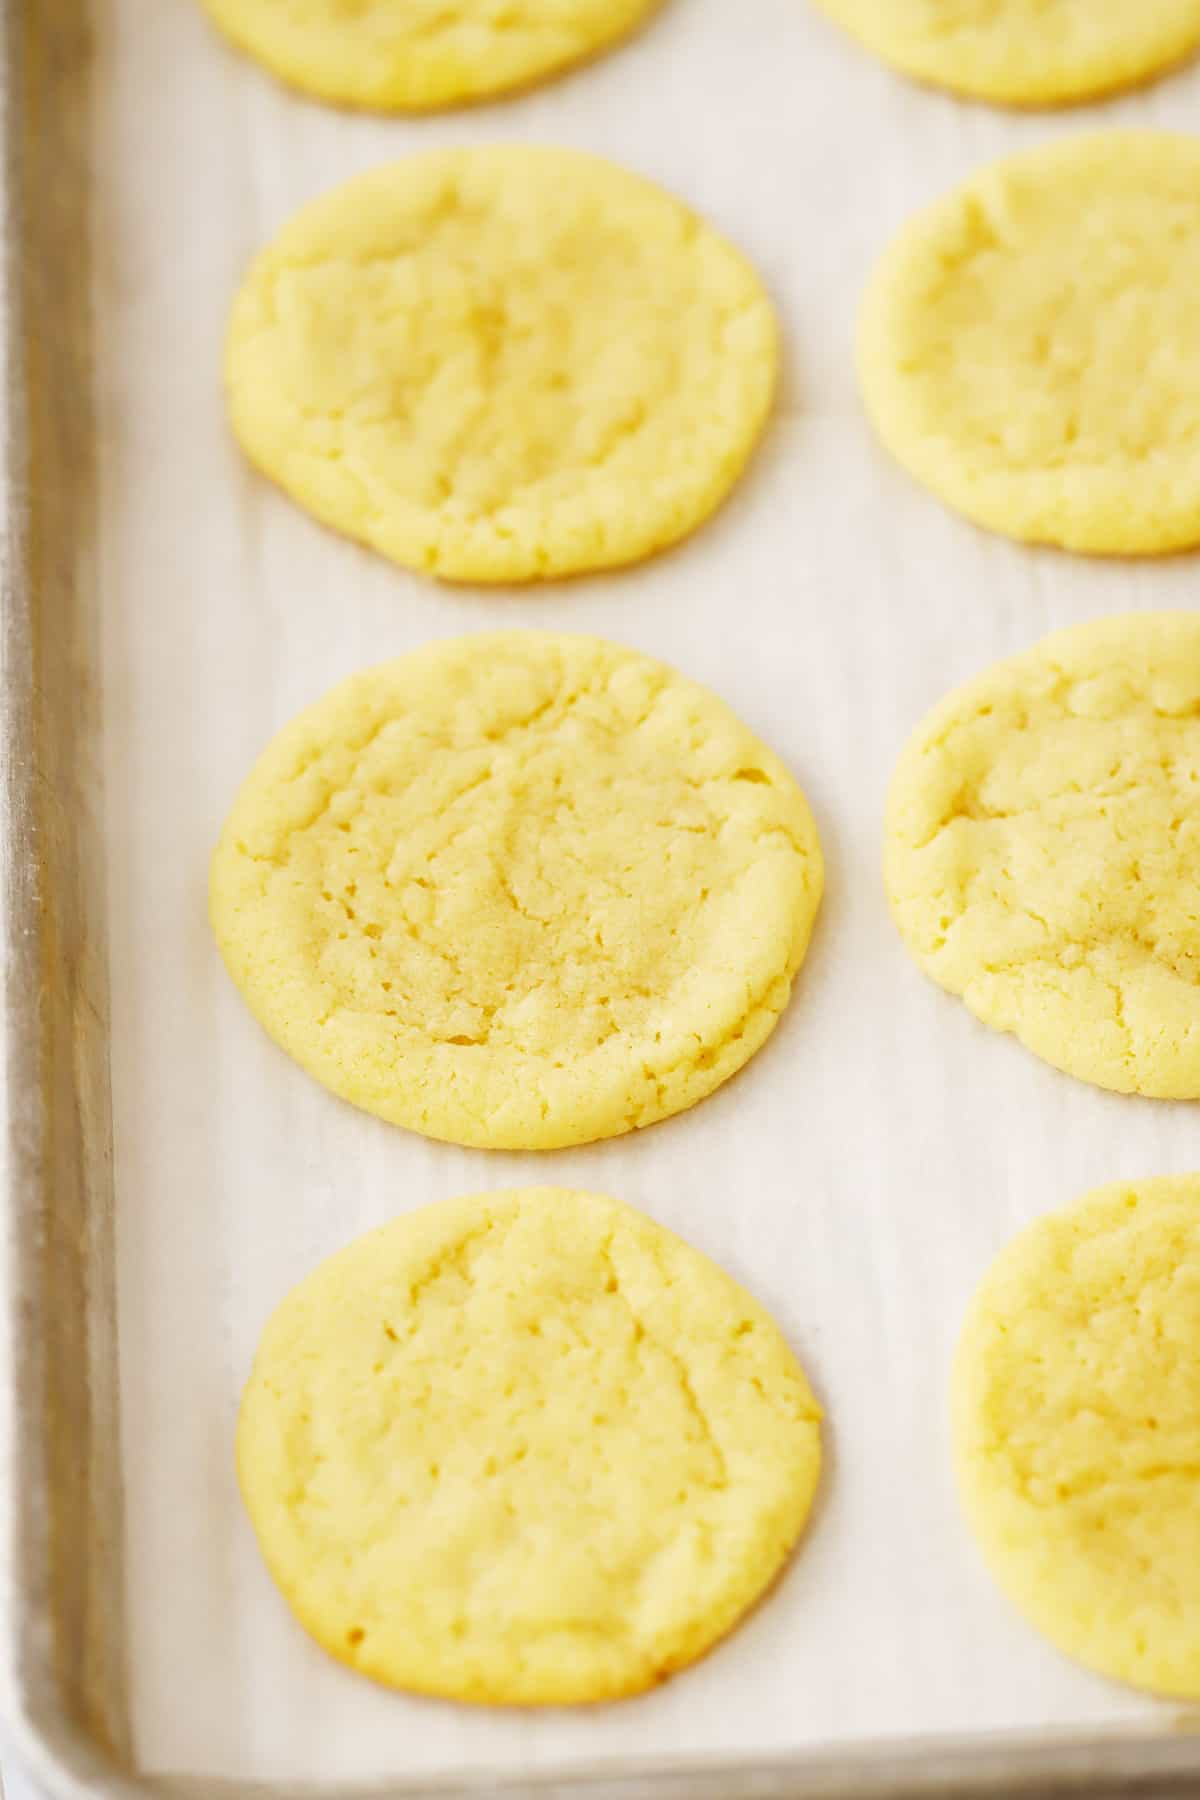 Baked lemon cookies on a baking sheet.